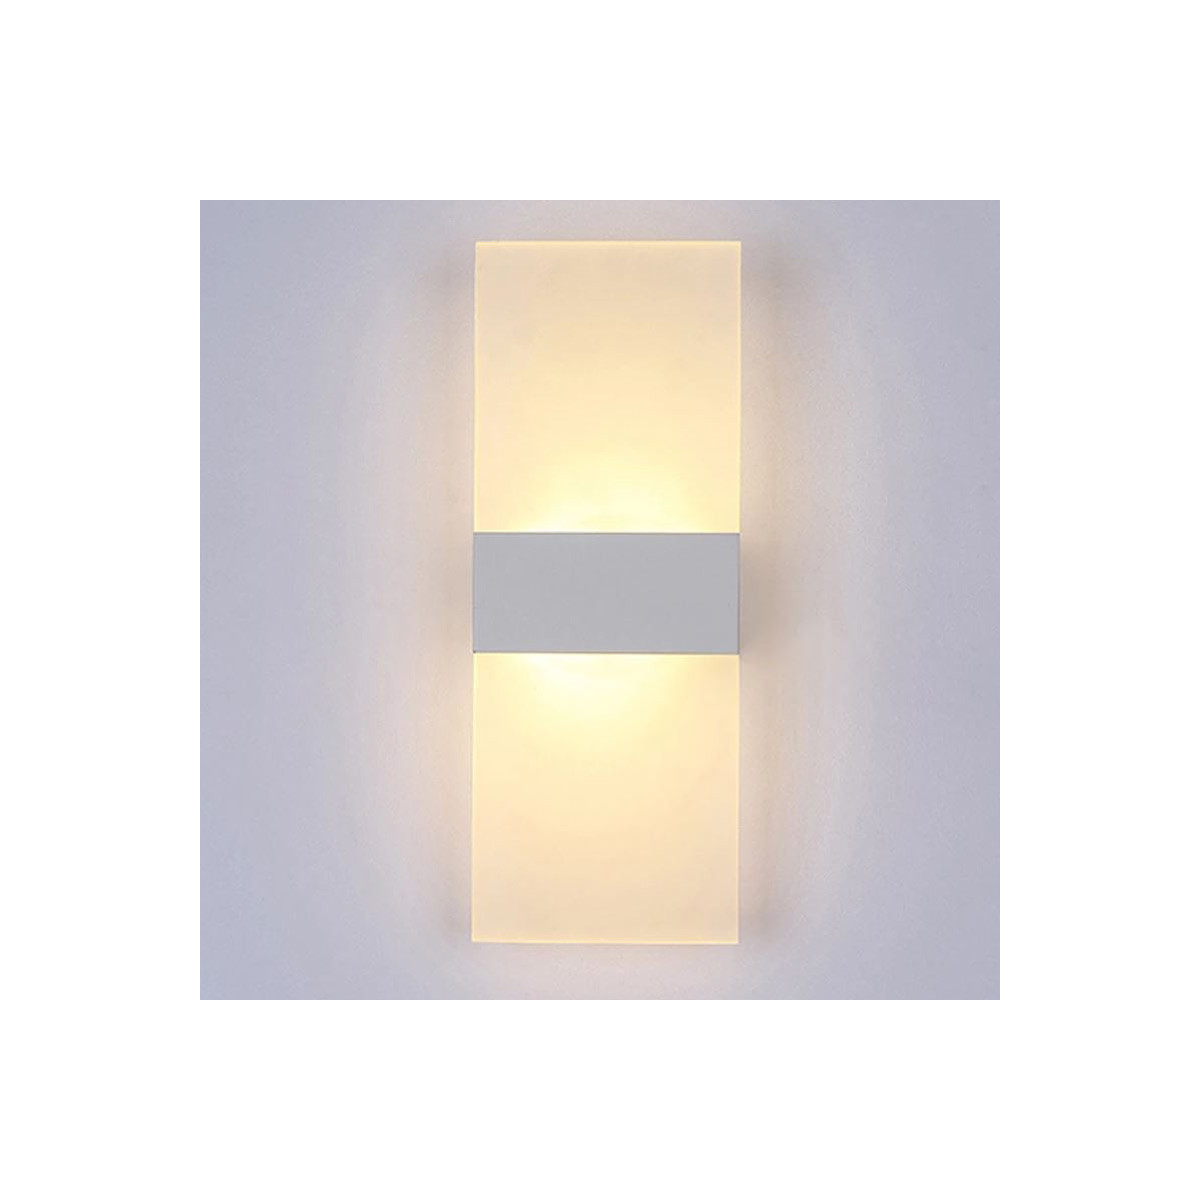 Acryl-LED 6W weiße Farbe anwenden